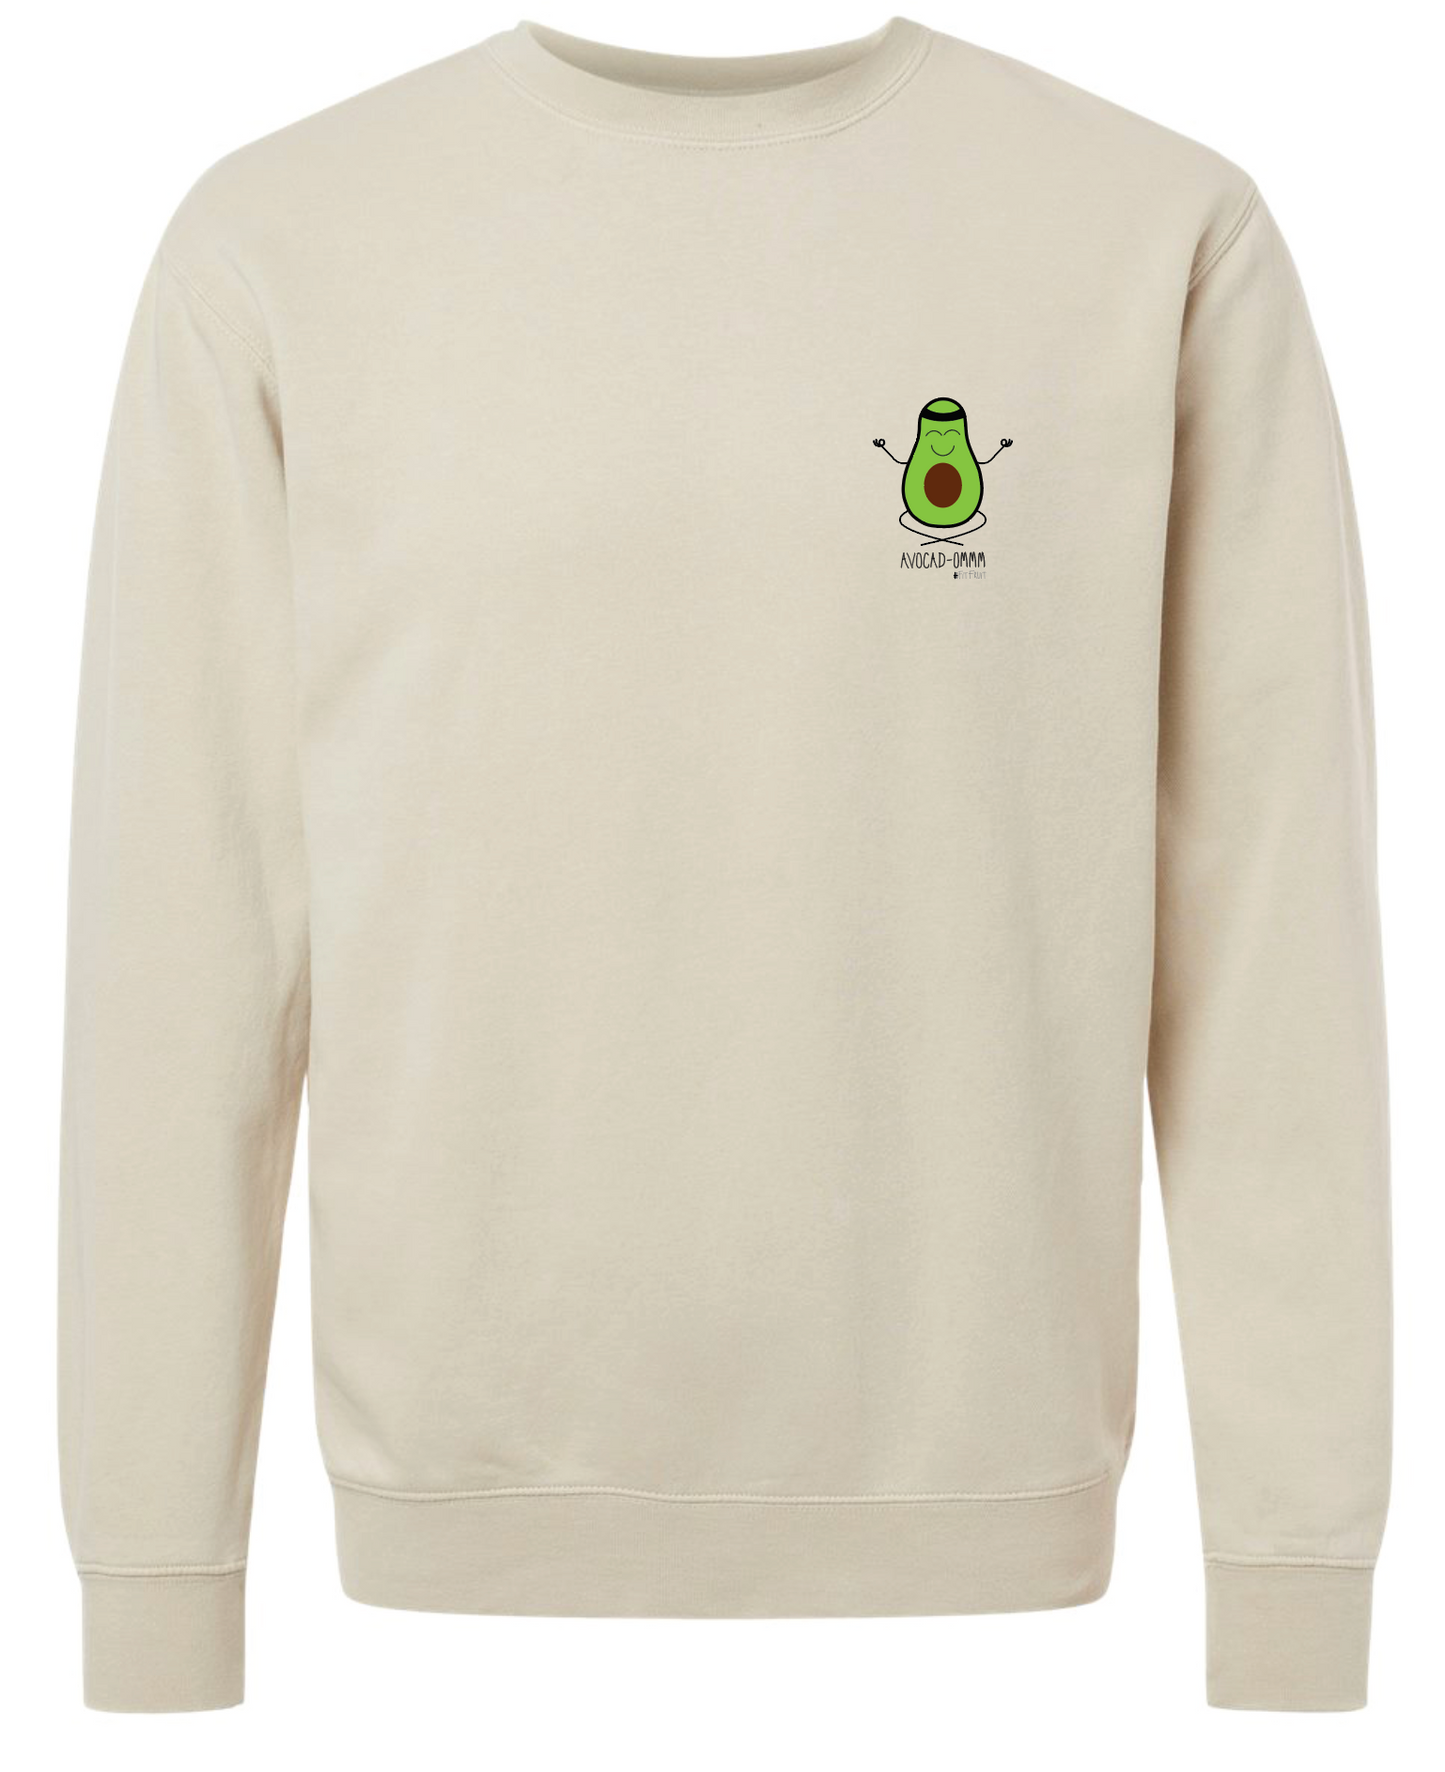 Ivory Crewneck Sweatshirt